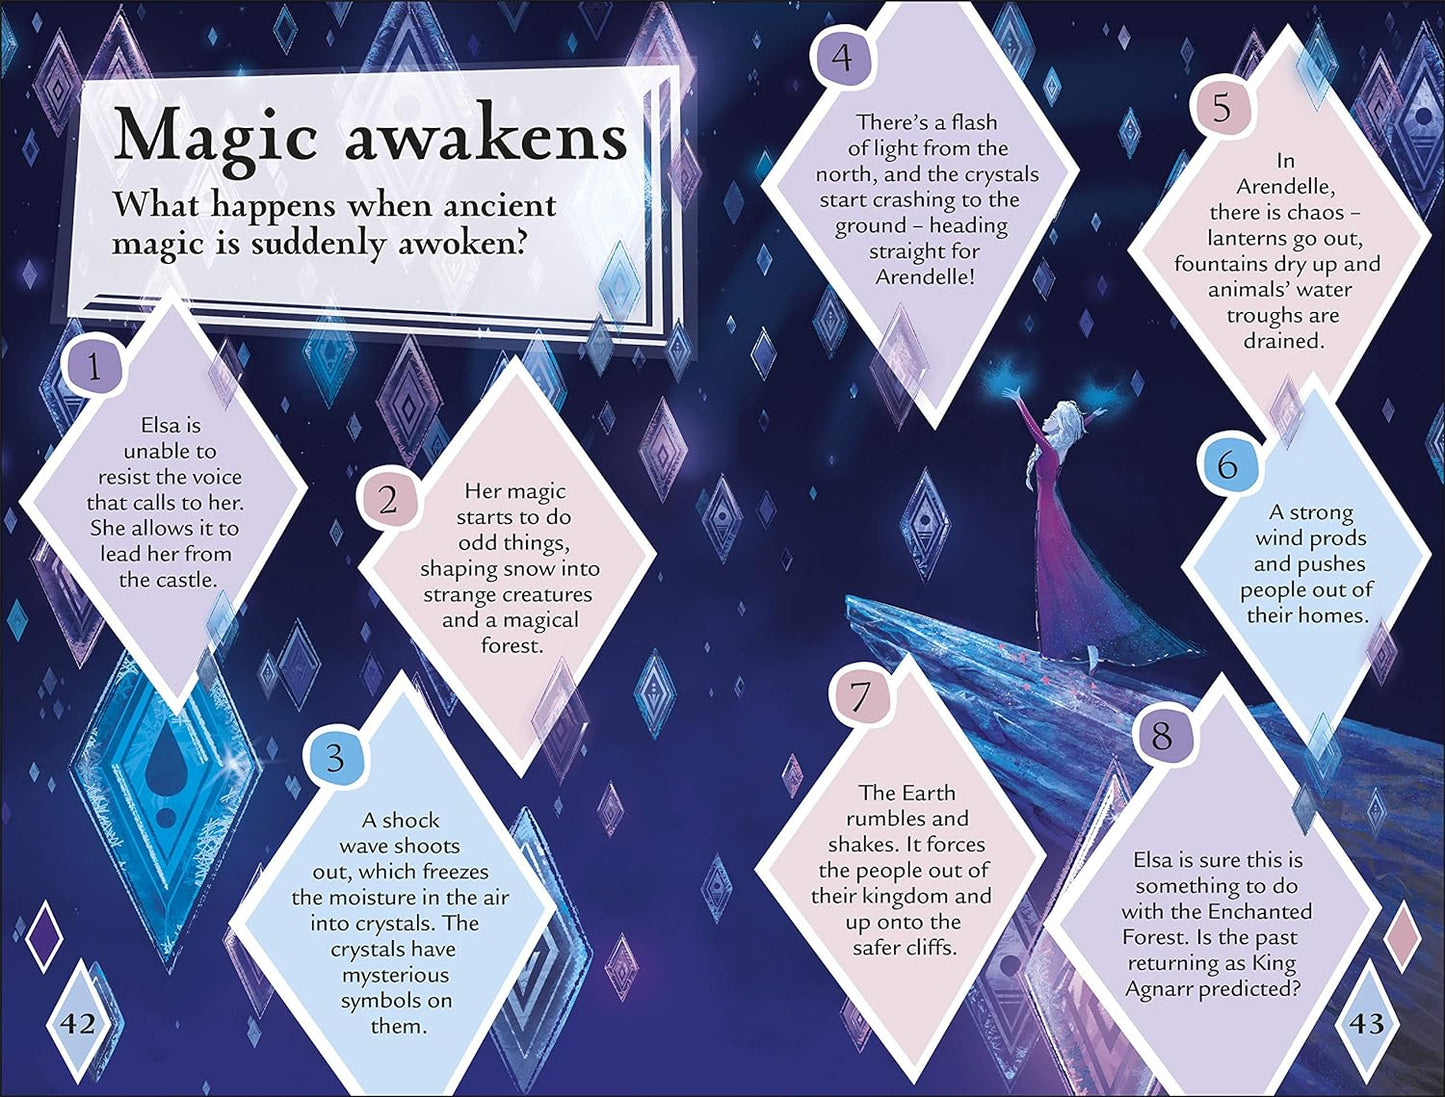 Disney Frozen II The Magical Guide Children's Book Fun Facts Quiz Poster